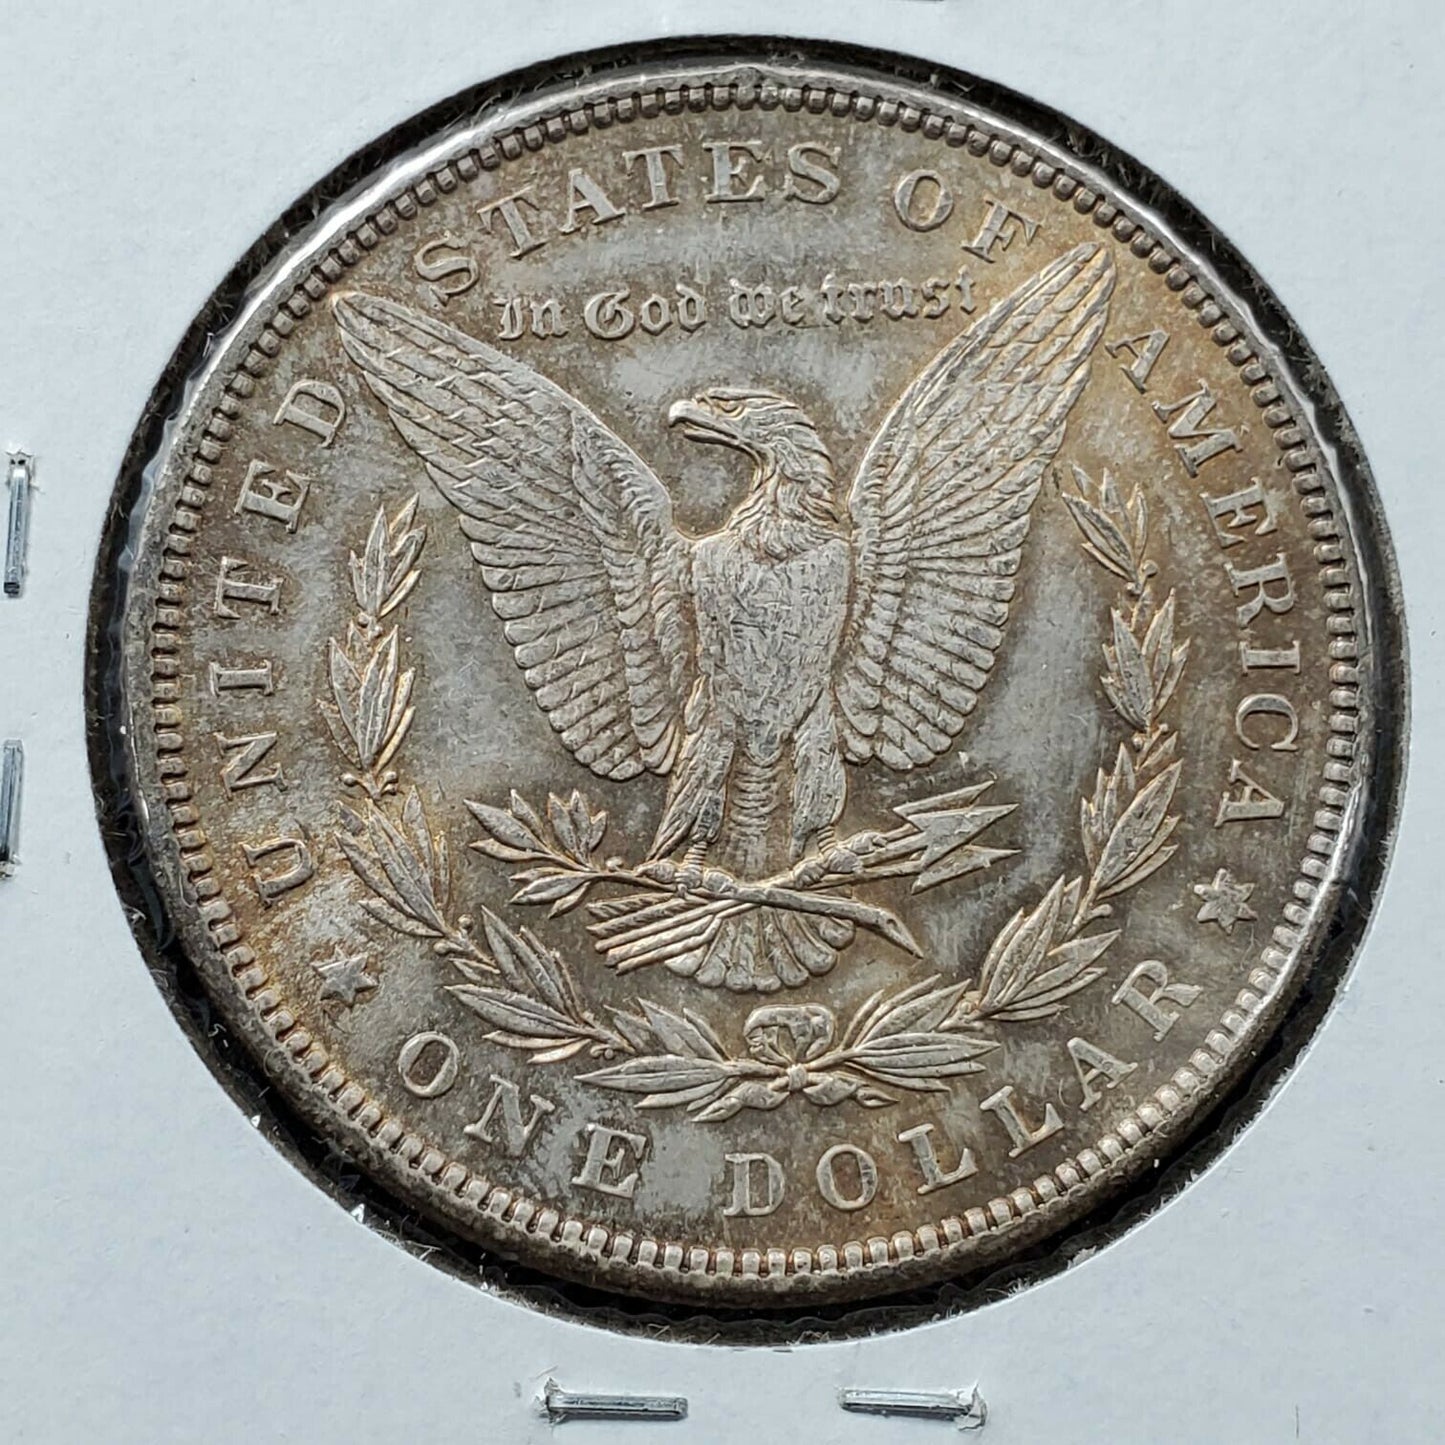 1897 p Morgan Silver Eagle Dollar $1 Coin Average UNC Uncirculated Neat Toning